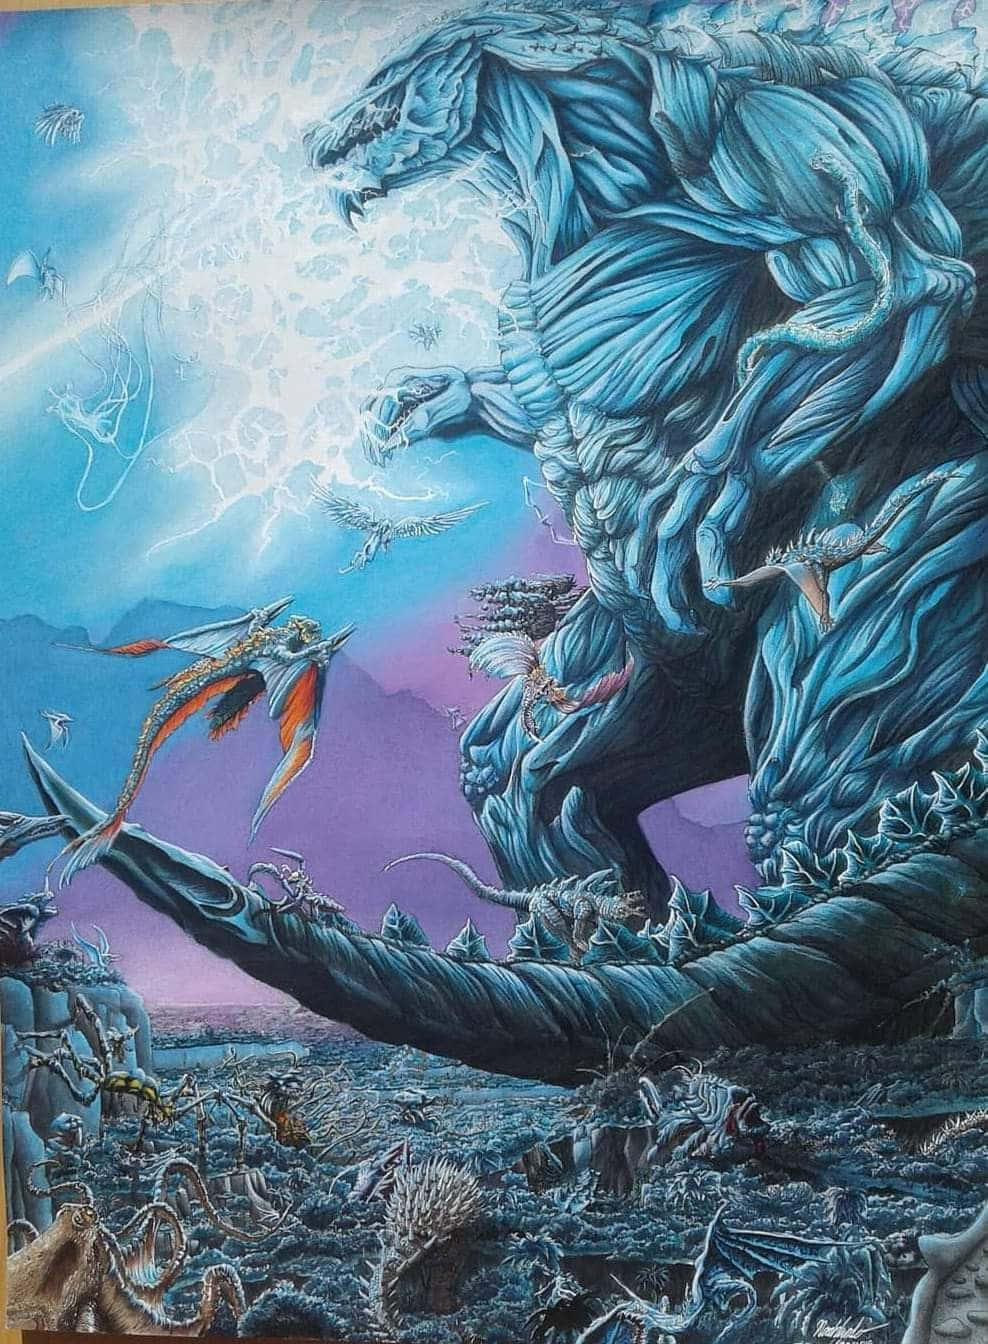 Caption: Epic Godzilla Art Battle Scene Wallpaper